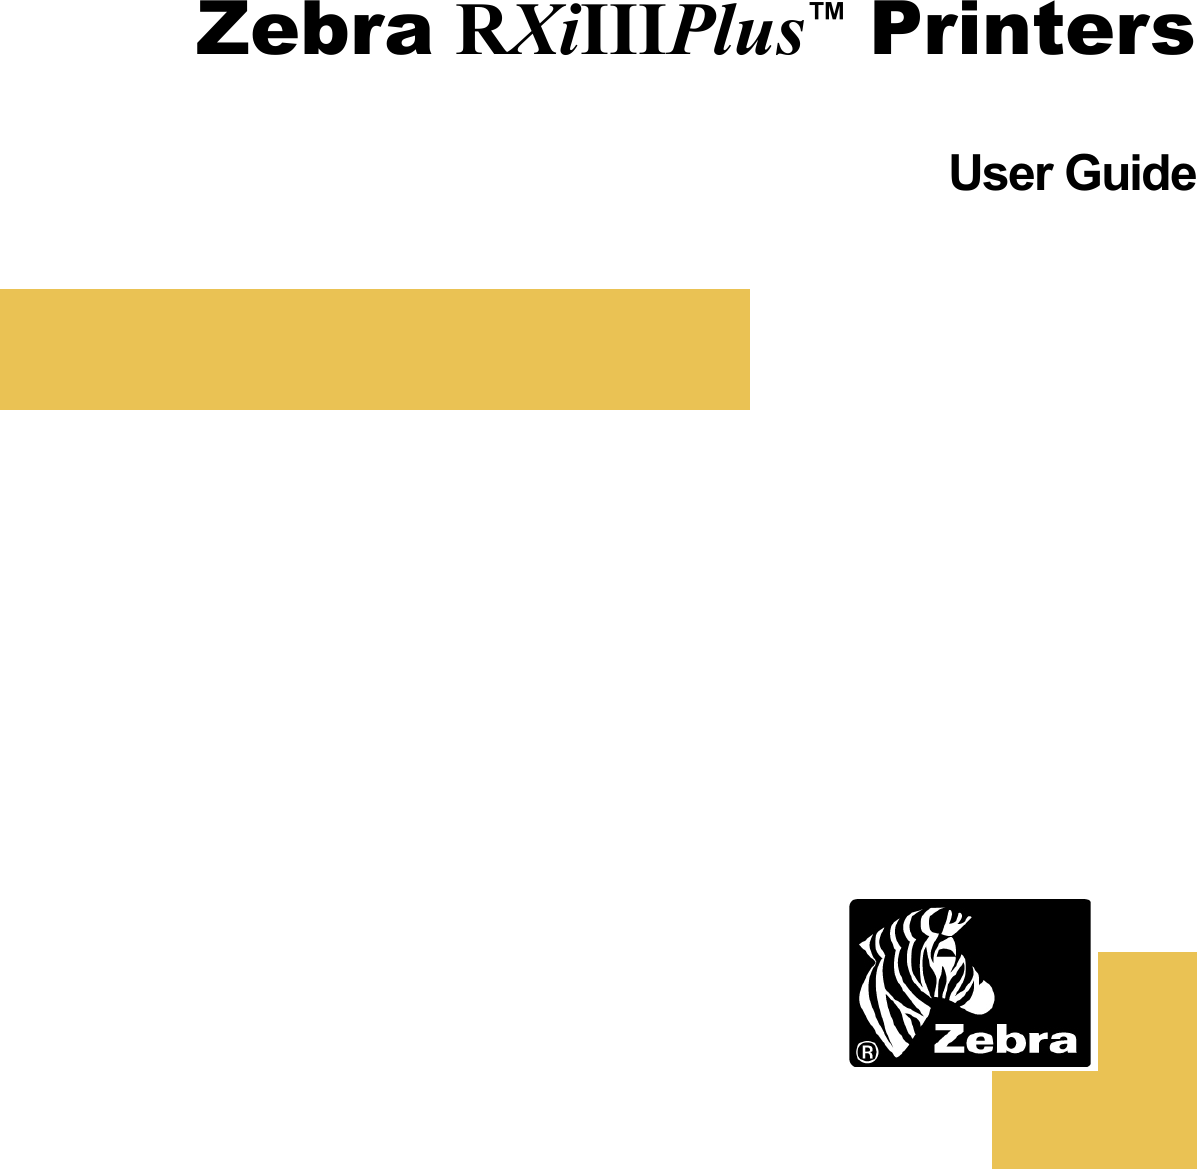  Zebra RXiIIIPlus™ PrintersUser Guide